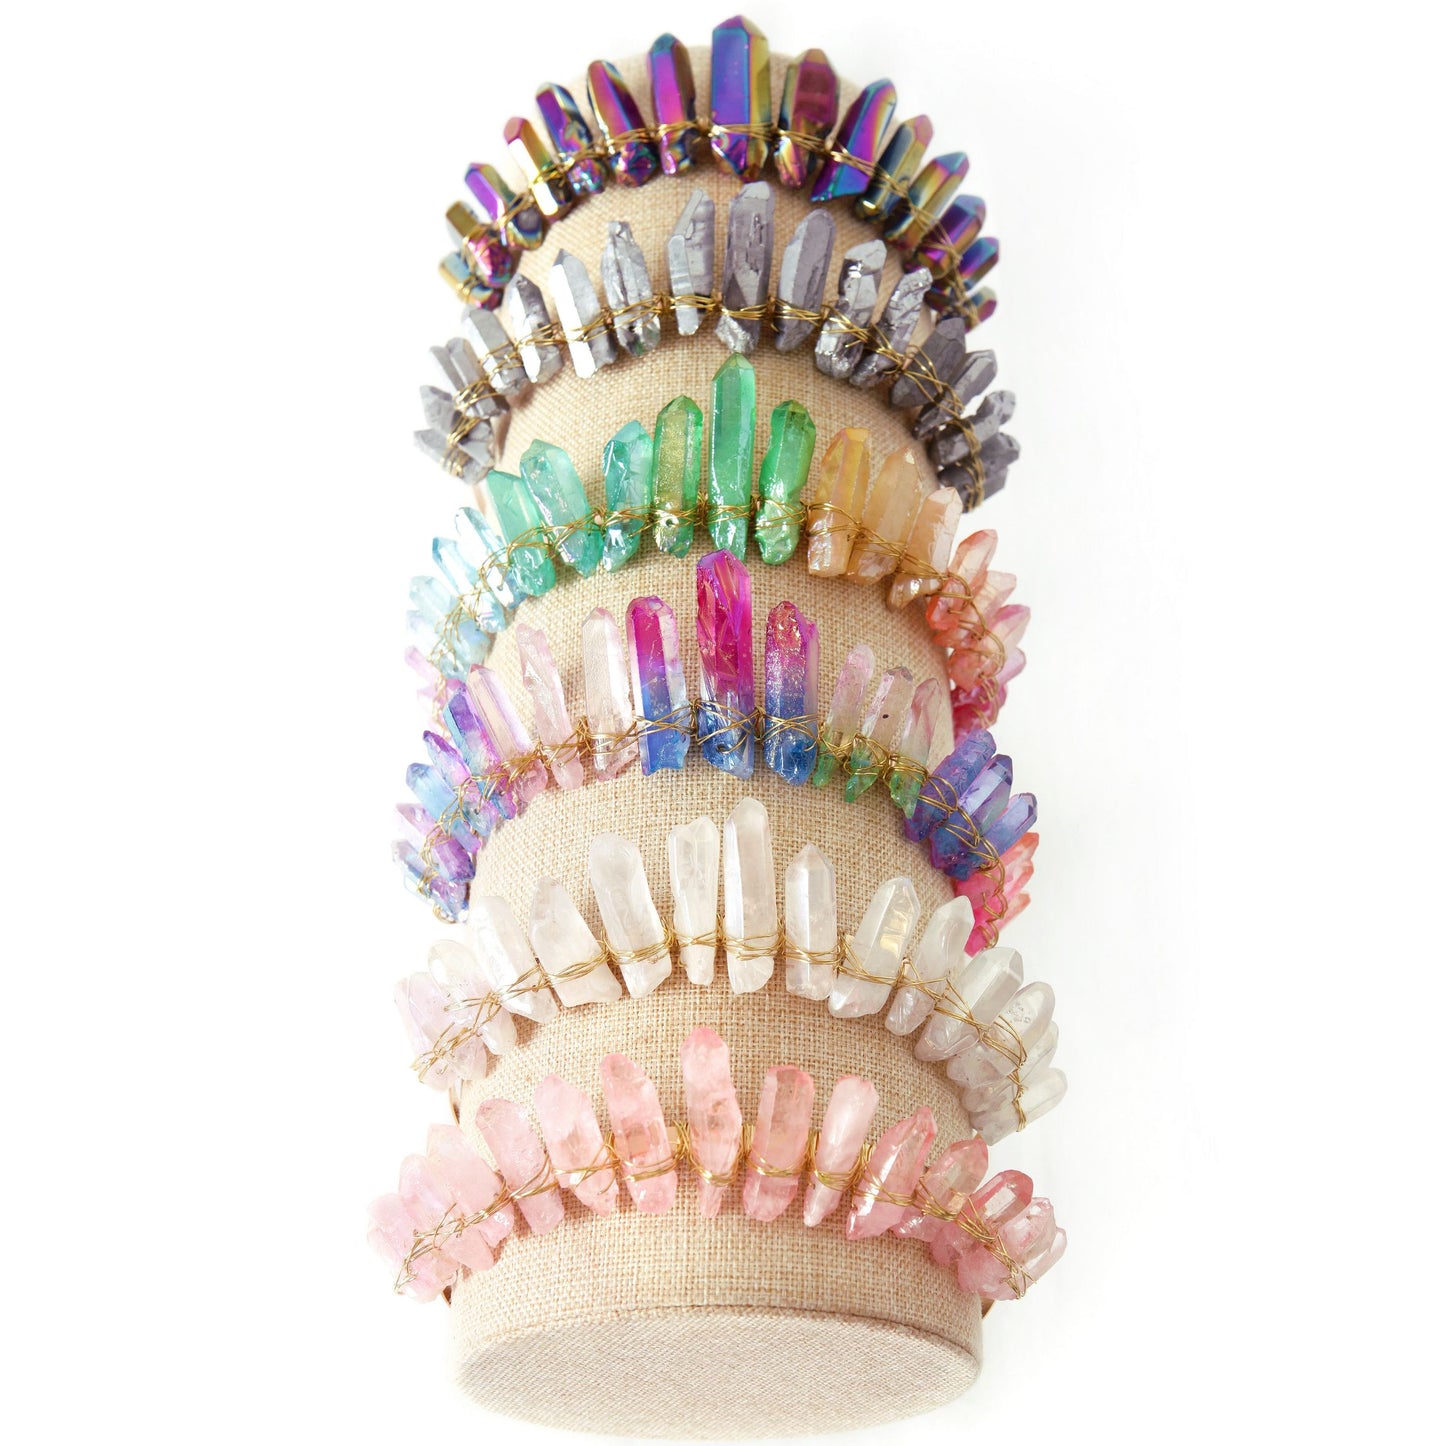 Quartz Crystal Tiara Crowns: Celebrate Life's Magic